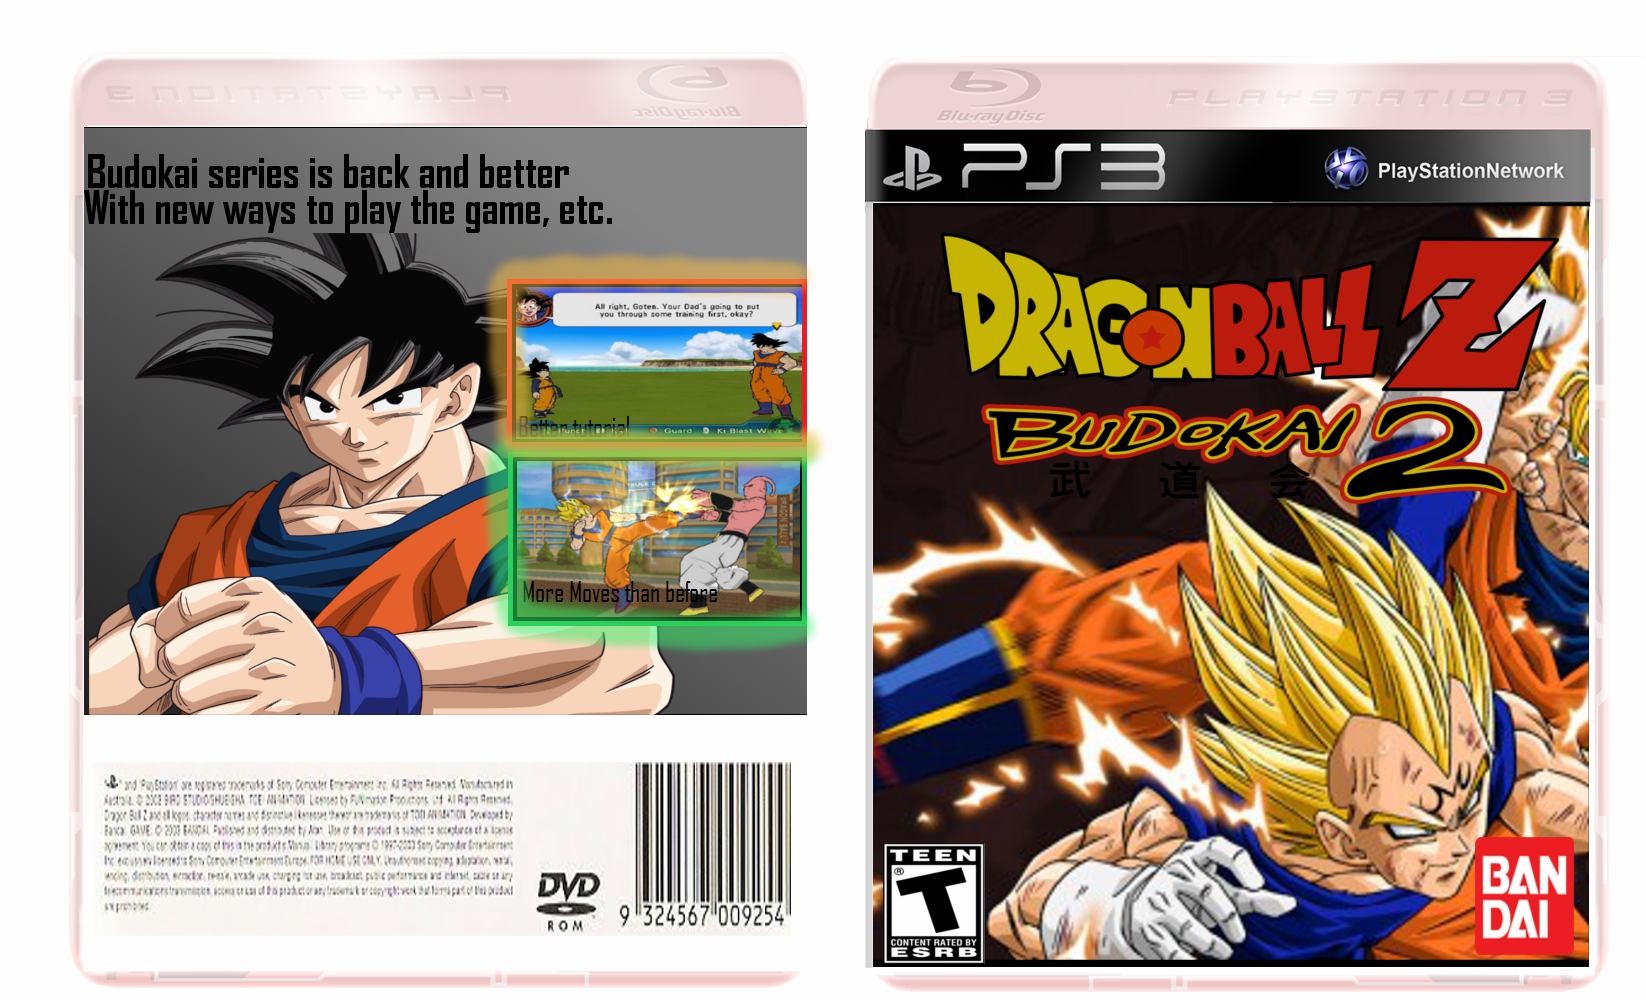 Dragon Ball Z Budokai 2 PS3 version box cover